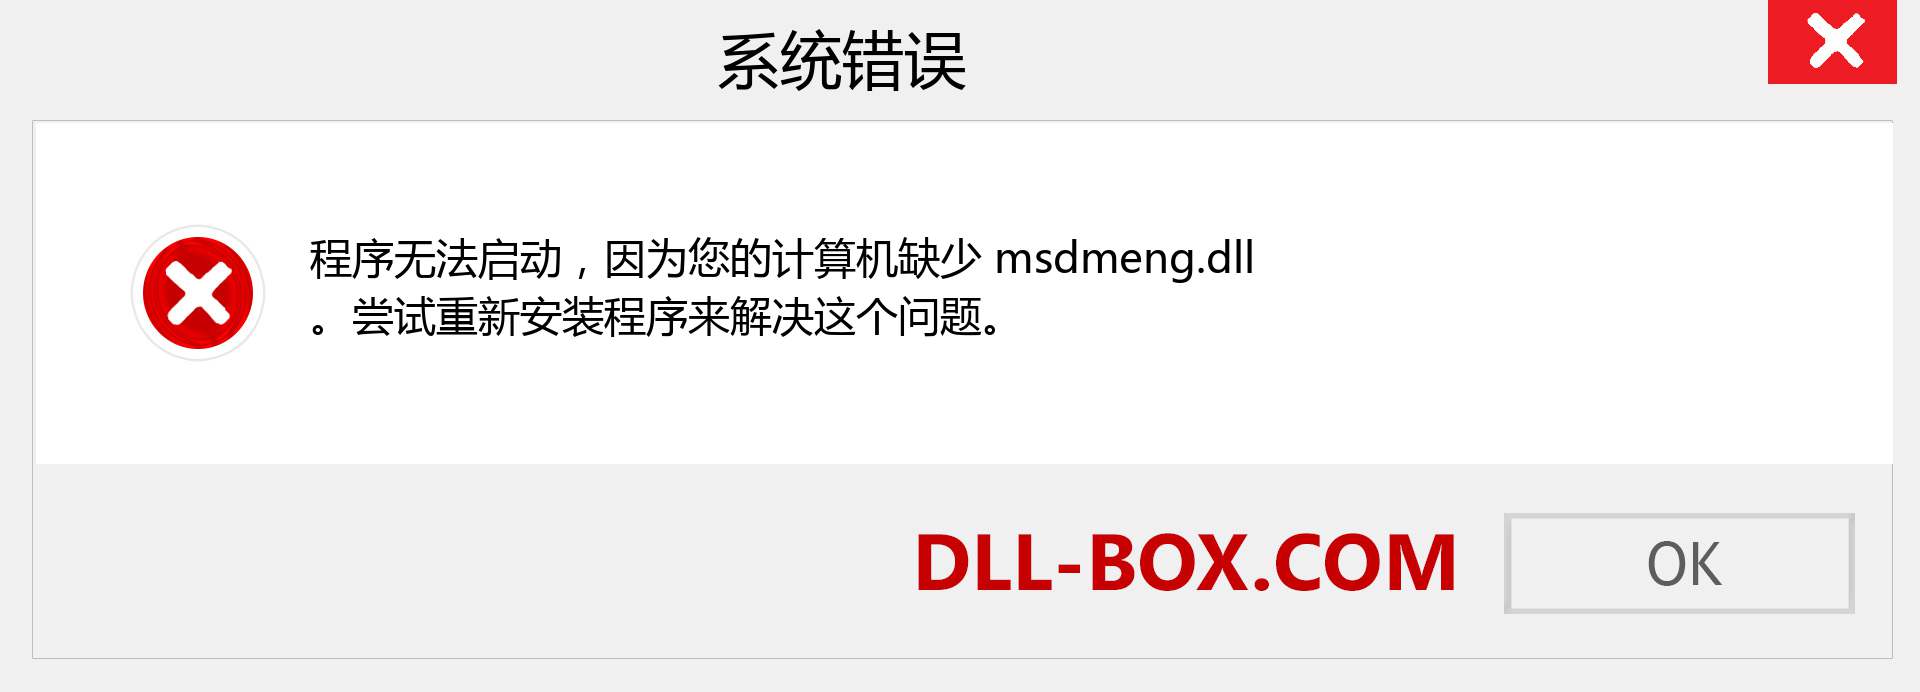 msdmeng.dll 文件丢失？。 适用于 Windows 7、8、10 的下载 - 修复 Windows、照片、图像上的 msdmeng dll 丢失错误